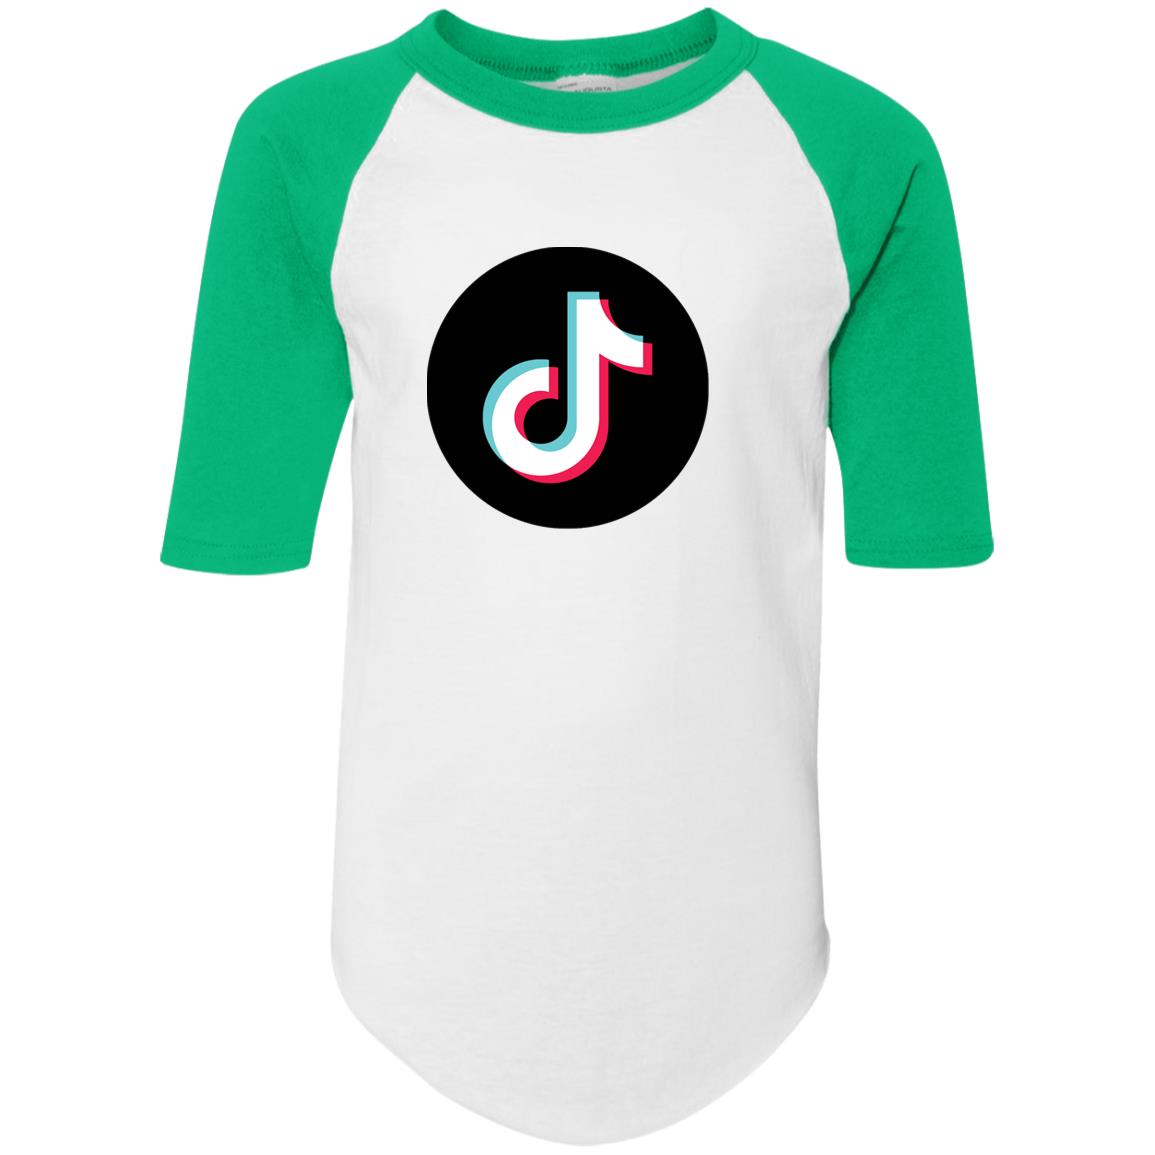 TikTok Kids shirt with round TikTok logo and coloured sleeves - SD-style-shop